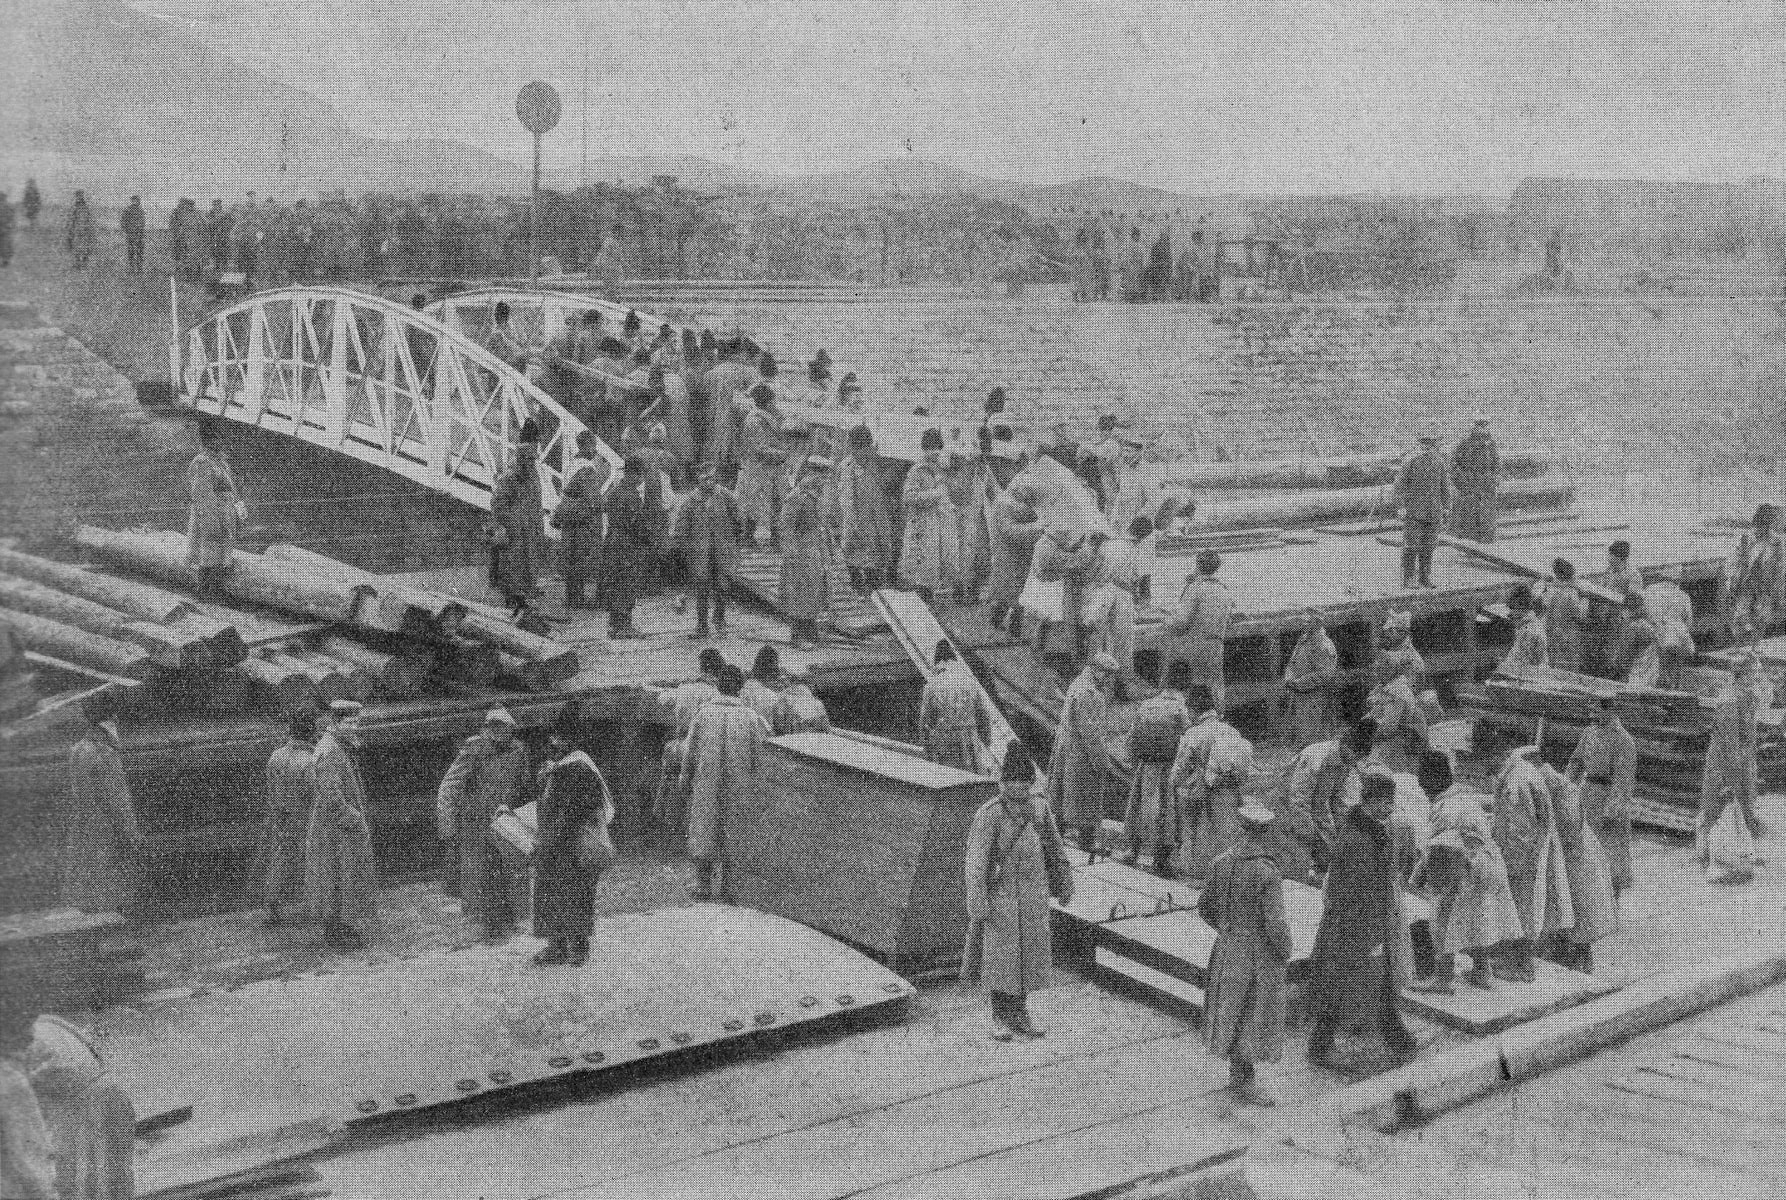 Romanian prisoners of war at work in a Danube port